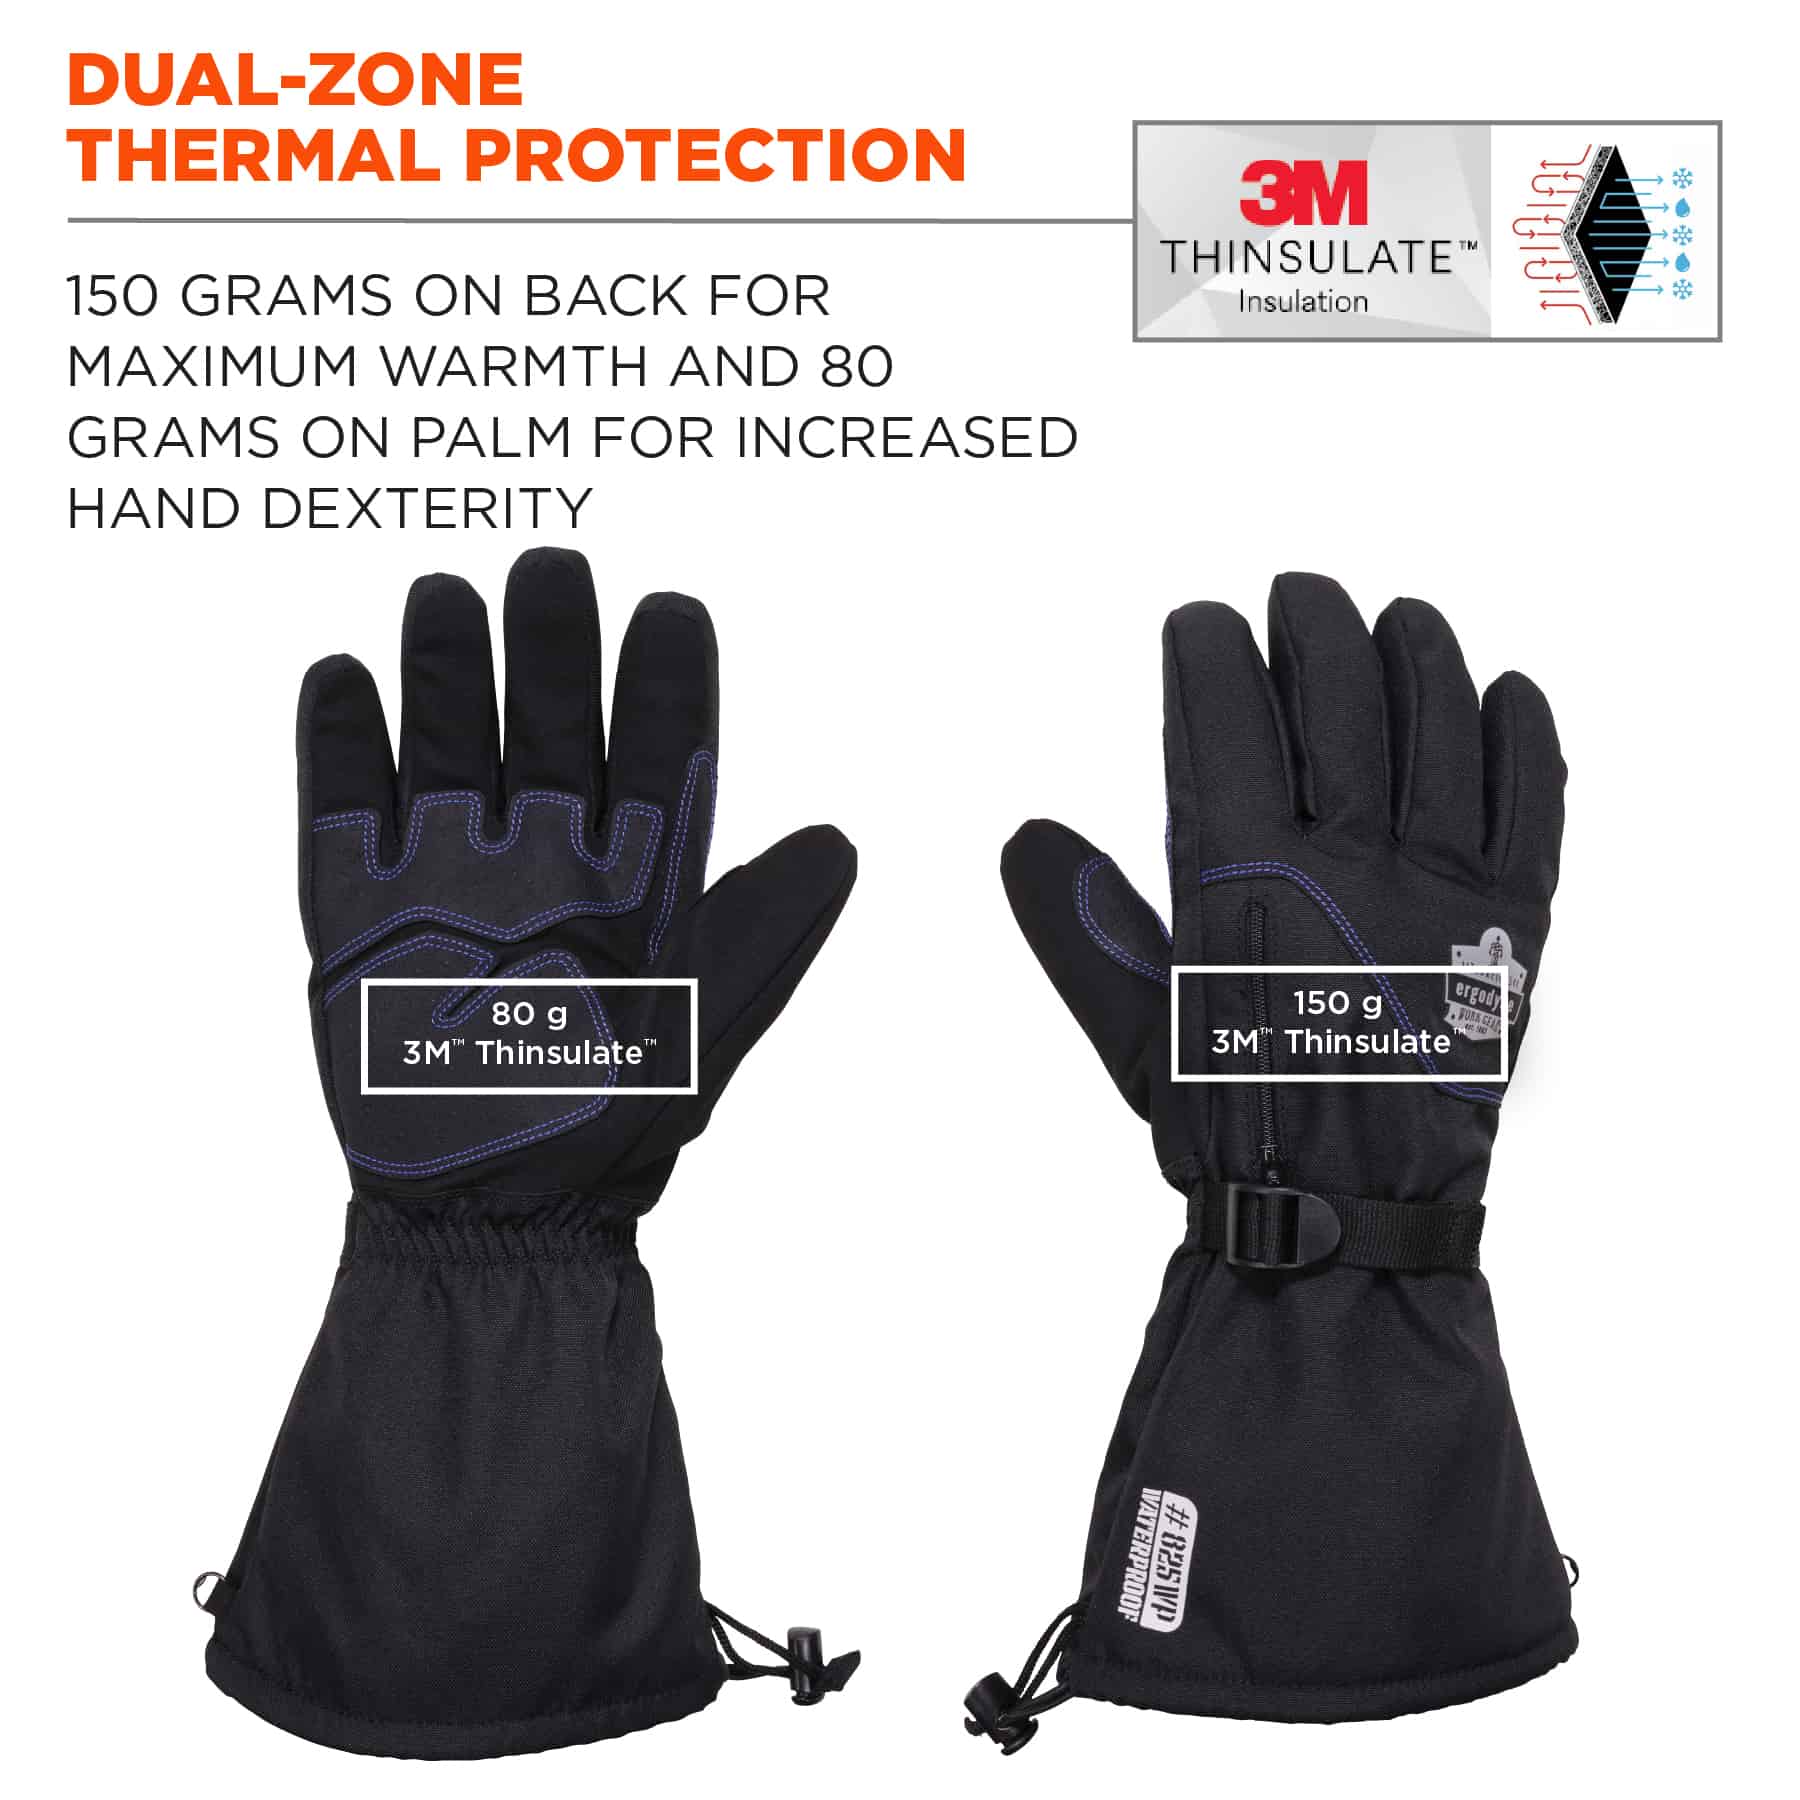 https://www.ergodyne.com/sites/default/files/product-images/17602-825wp-thermal-waterproof-winter-work-gloves-black-dual-zone-thermal-protection.jpg